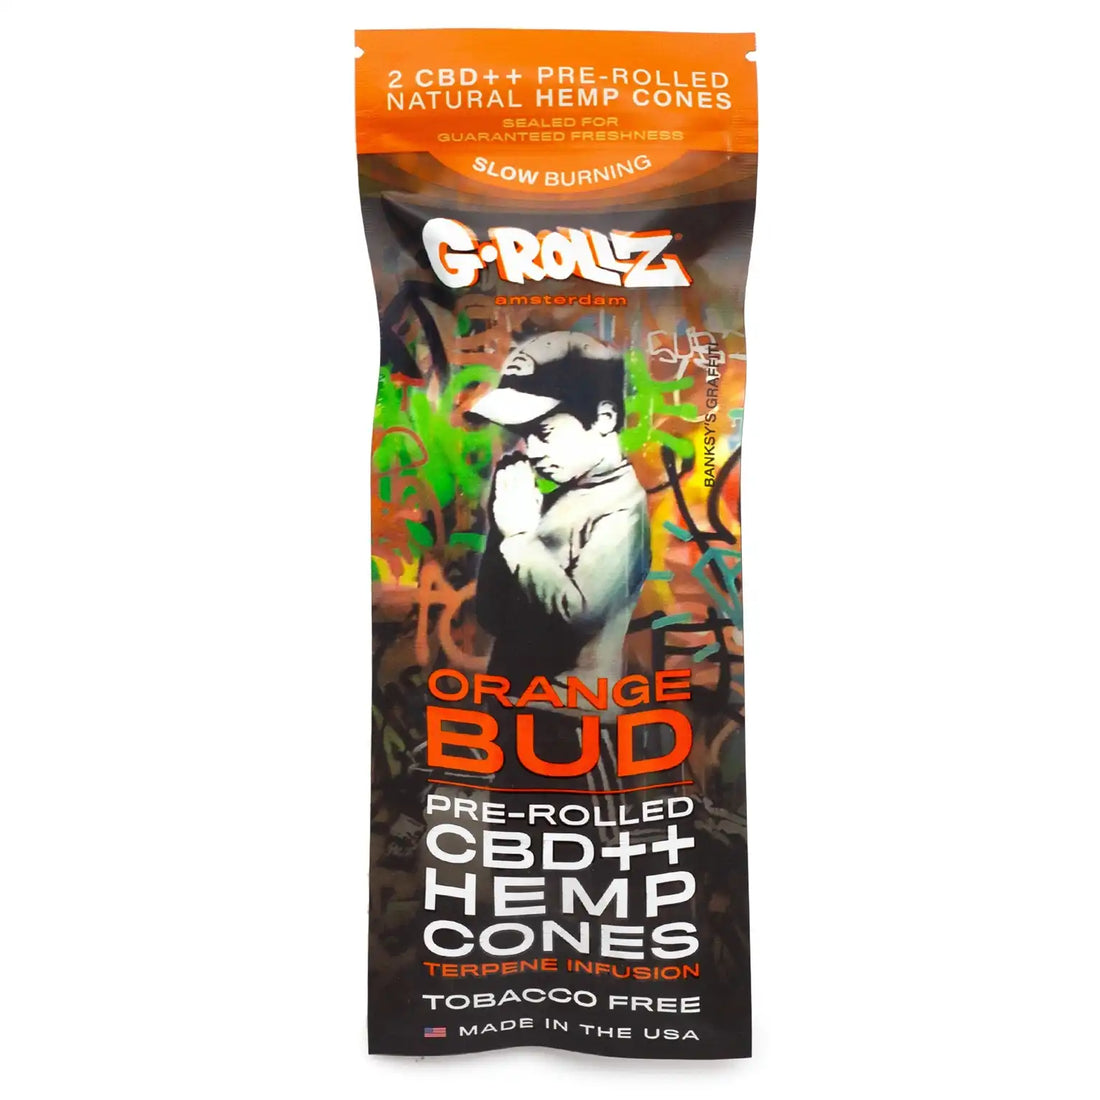 G-Rollz 2 CBD Hemp Cones Orange Bud